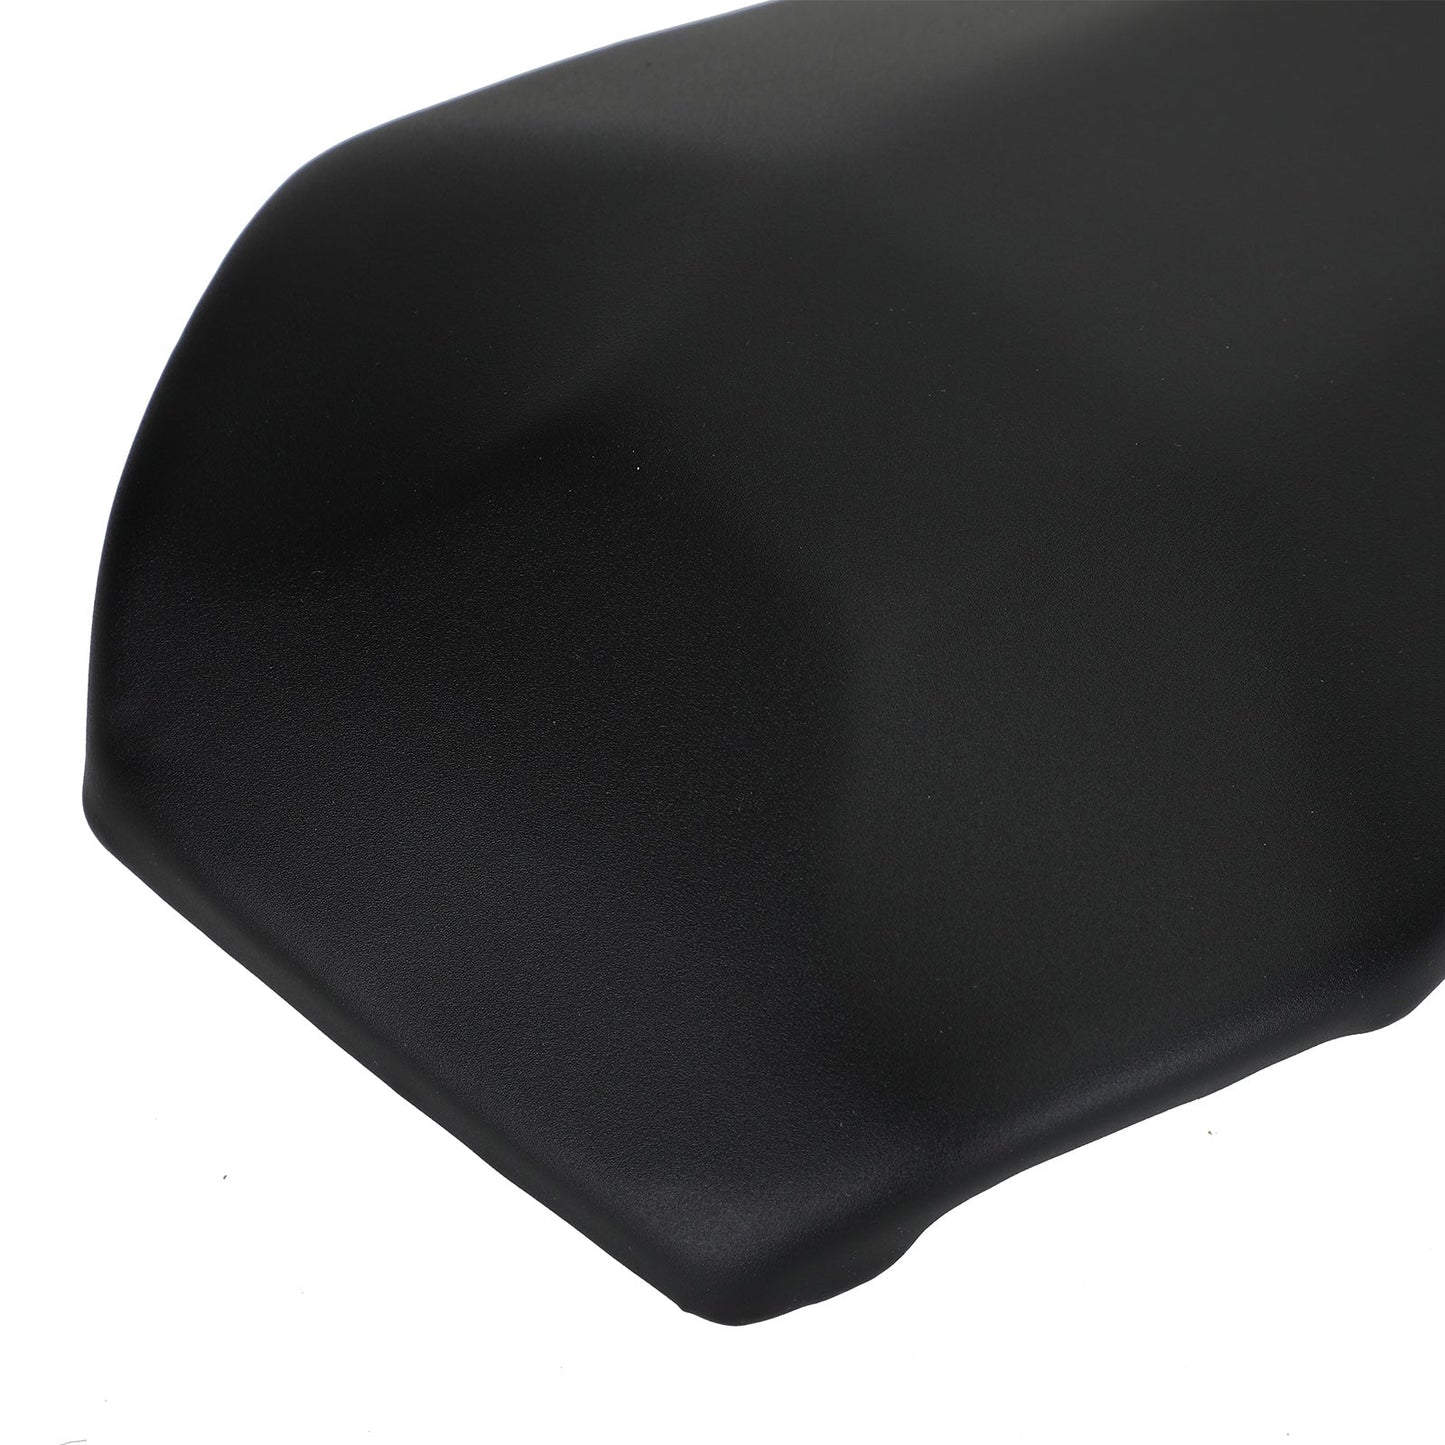 Rear Passenger Seat Black Cushion Fit For Ducati 899 2012-2014 1199 2012-2014